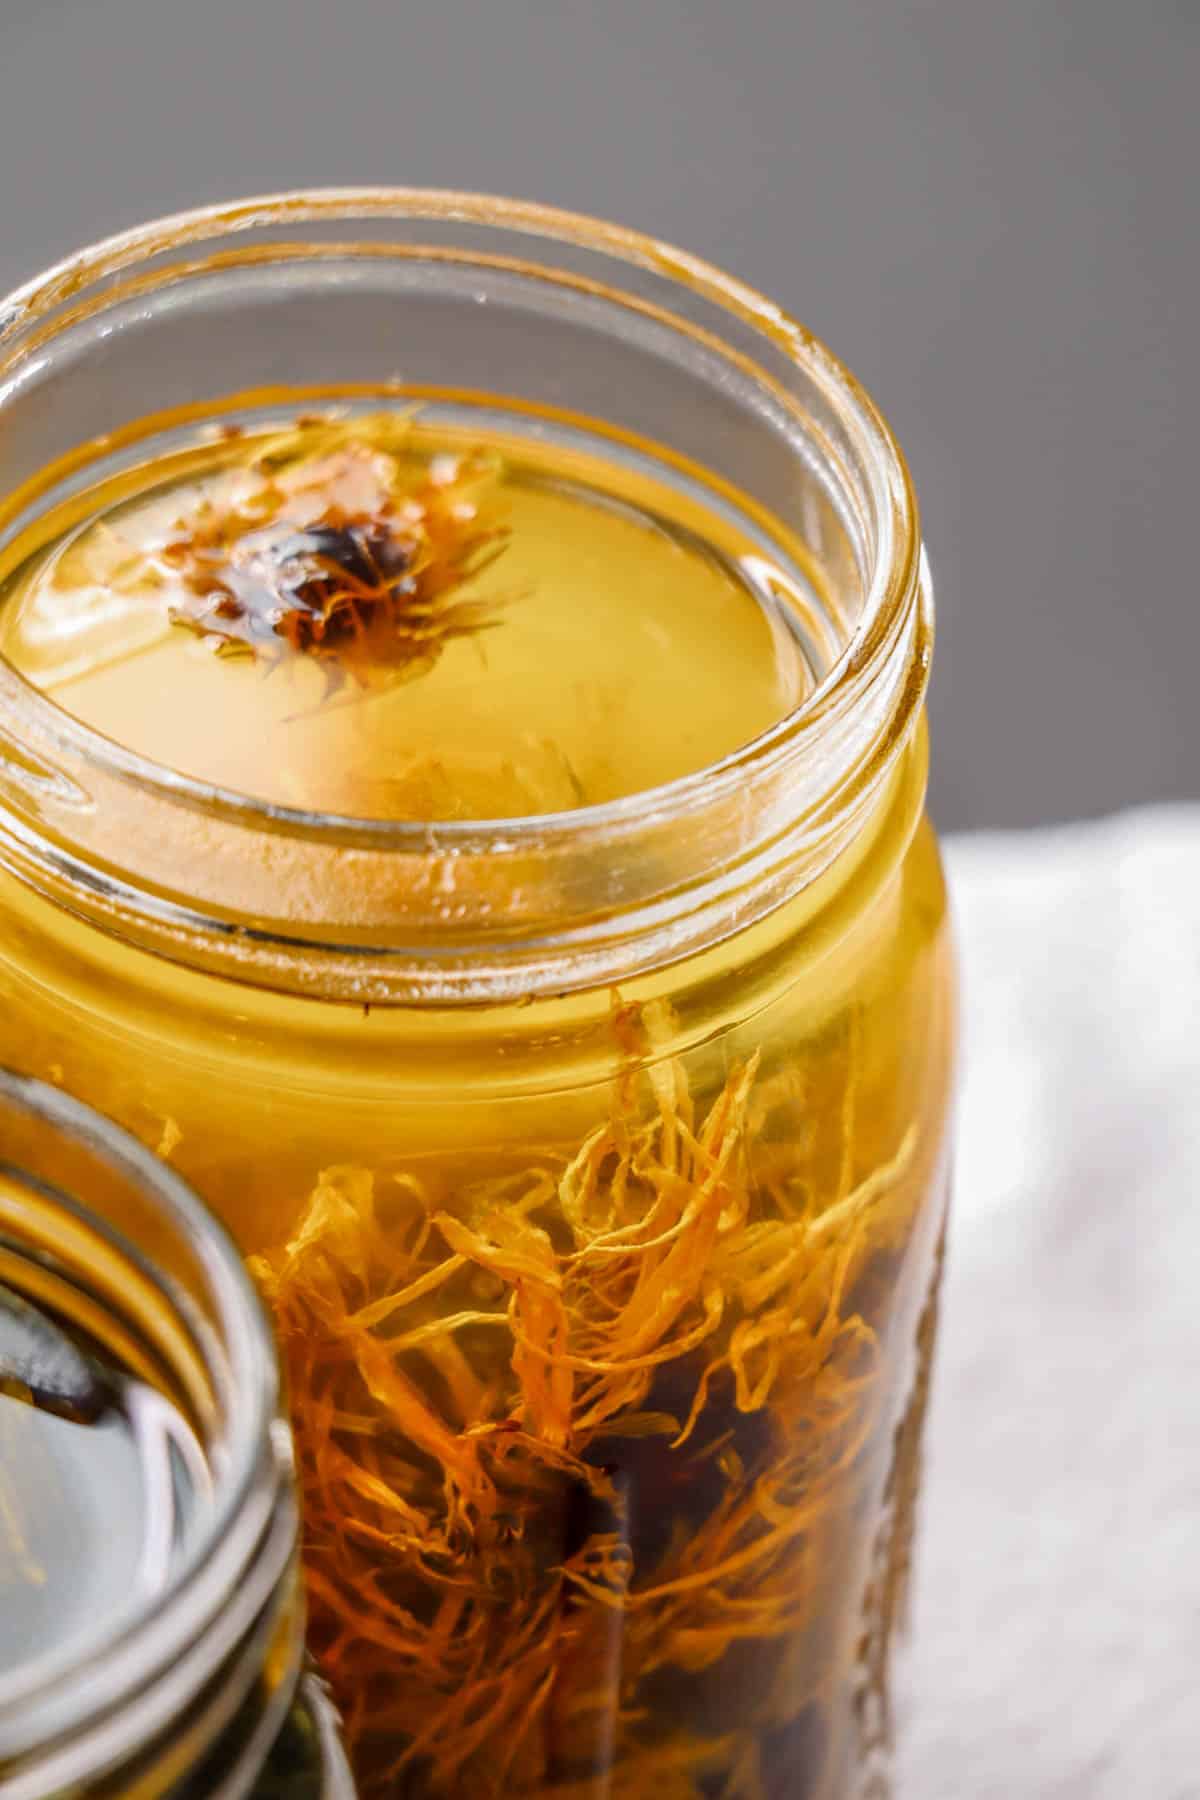 A jar of calendula flowers infusing in oil